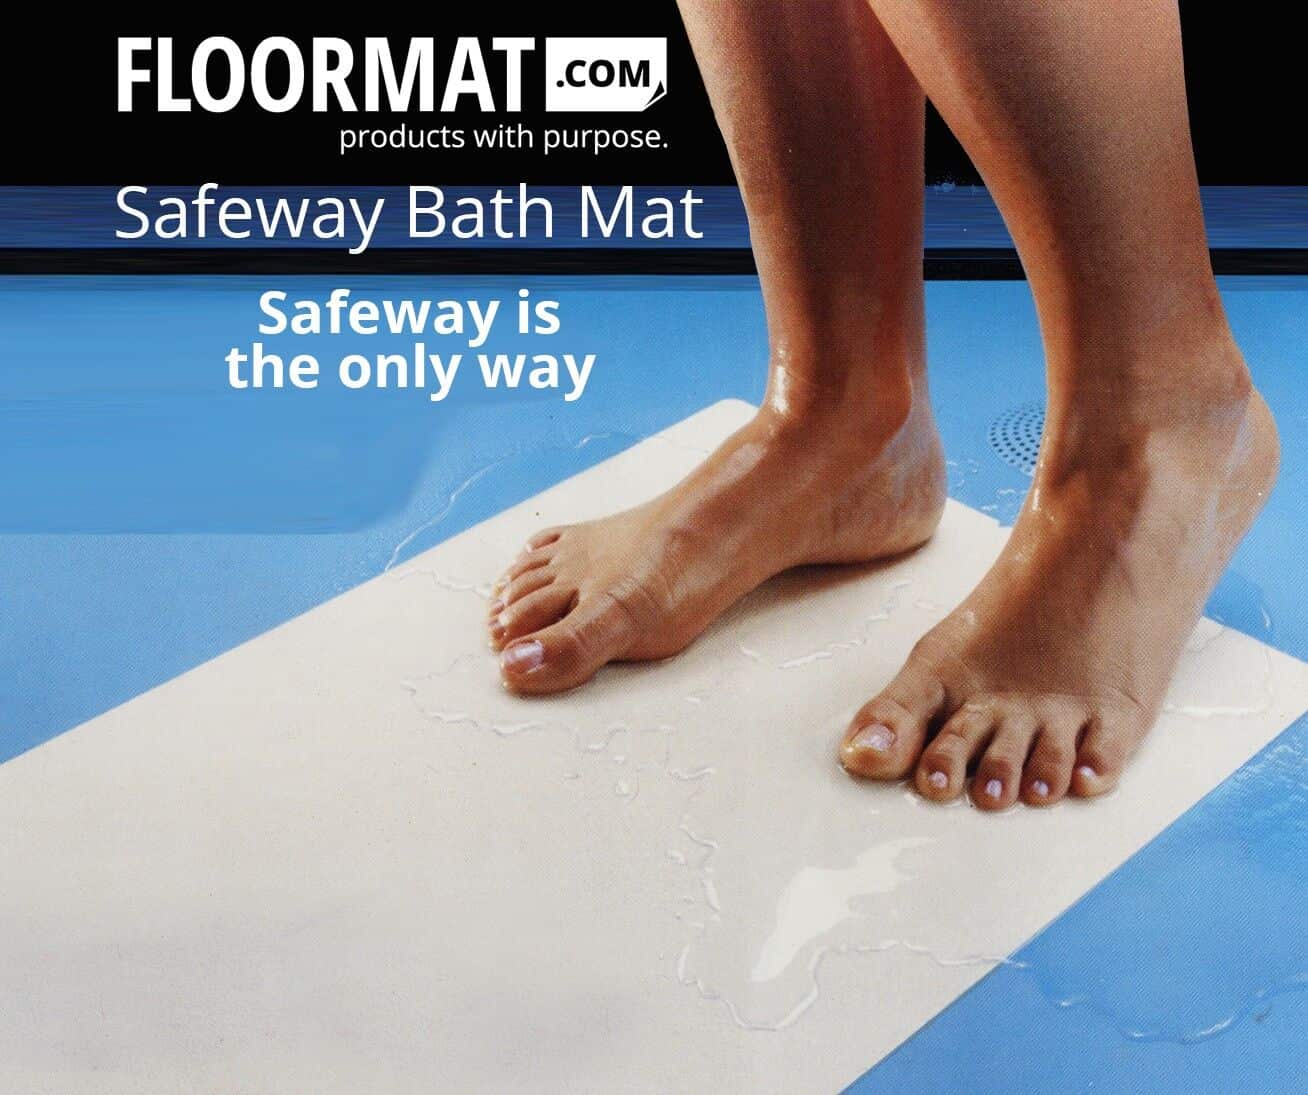 Bathroom upgrade tips: Introduce floormat safety bath mat.